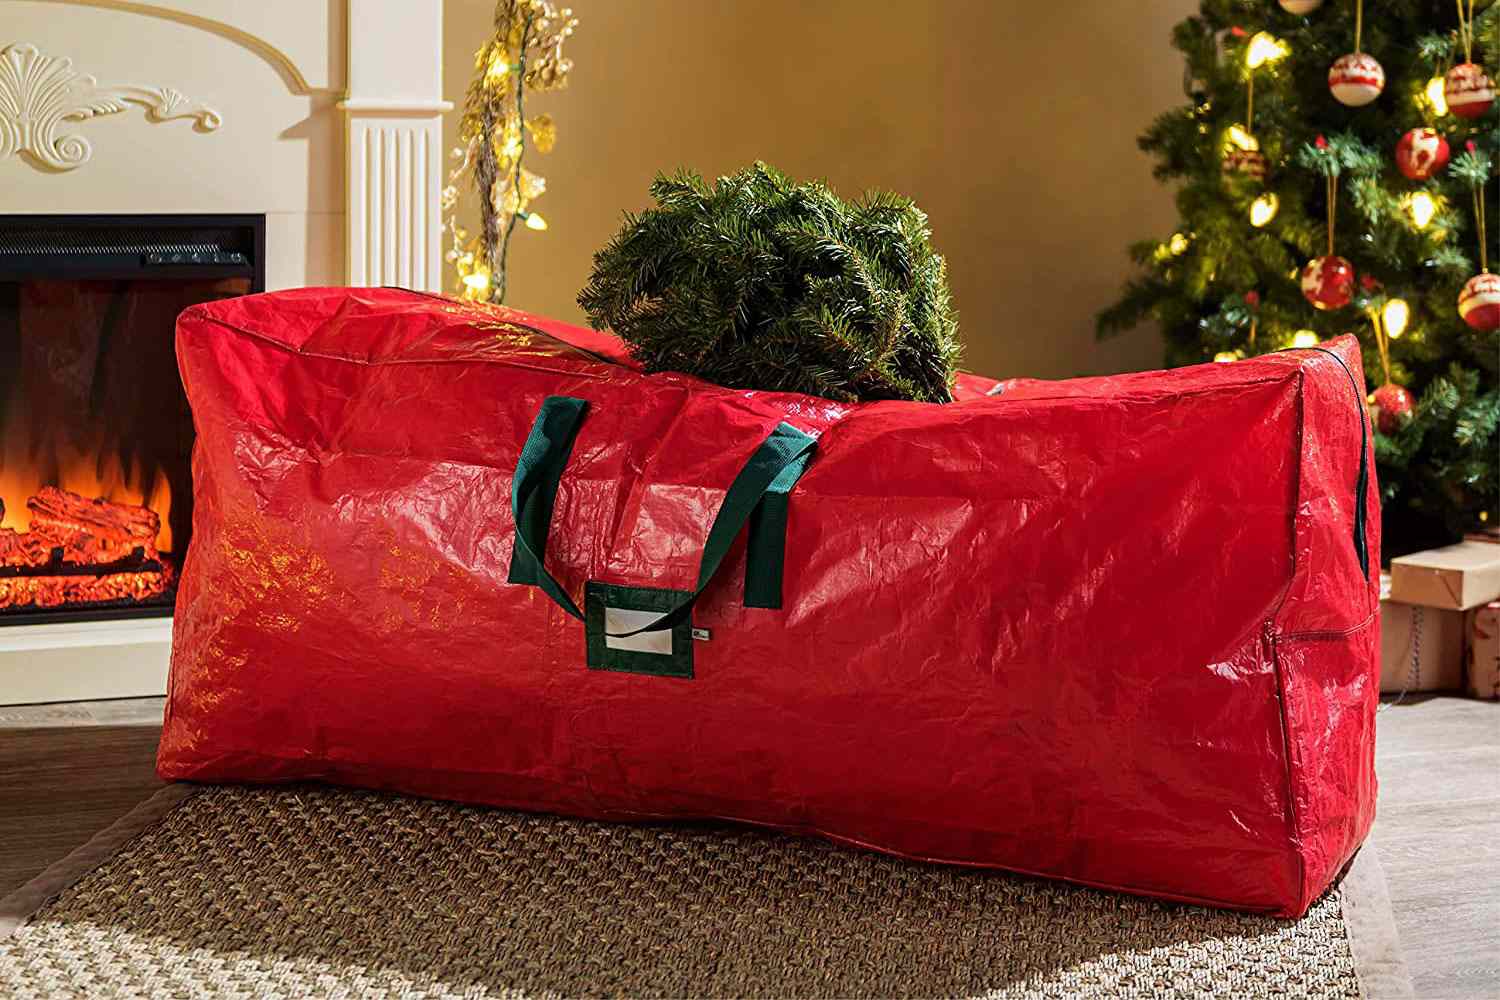 Where Can I Buy A Christmas Tree Storage Bag